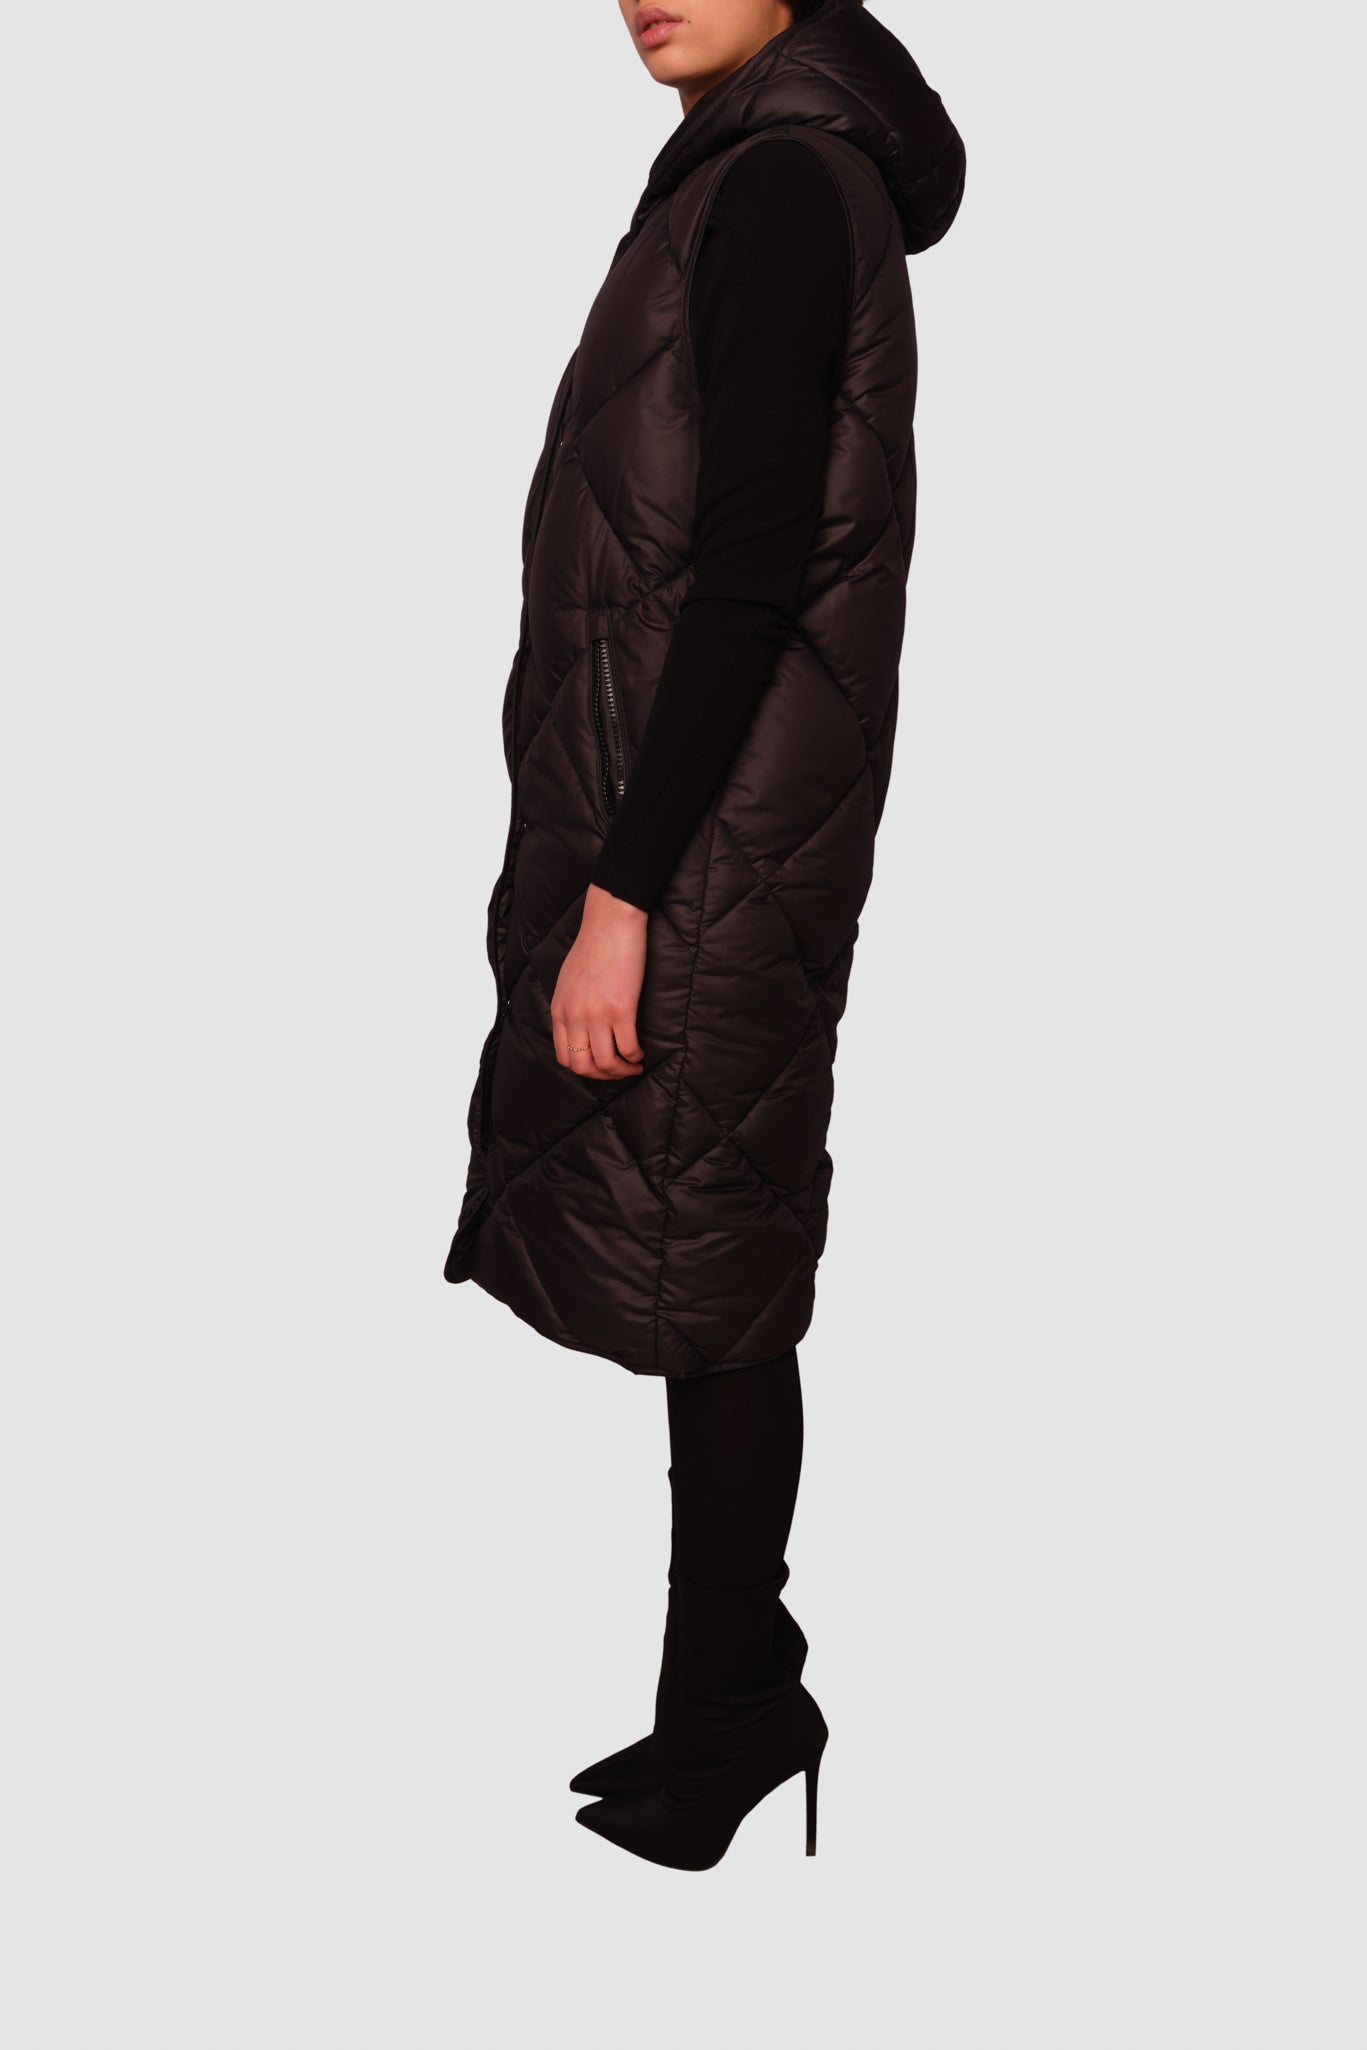 Penzance Black Long Sleeveless Puffer Jacket